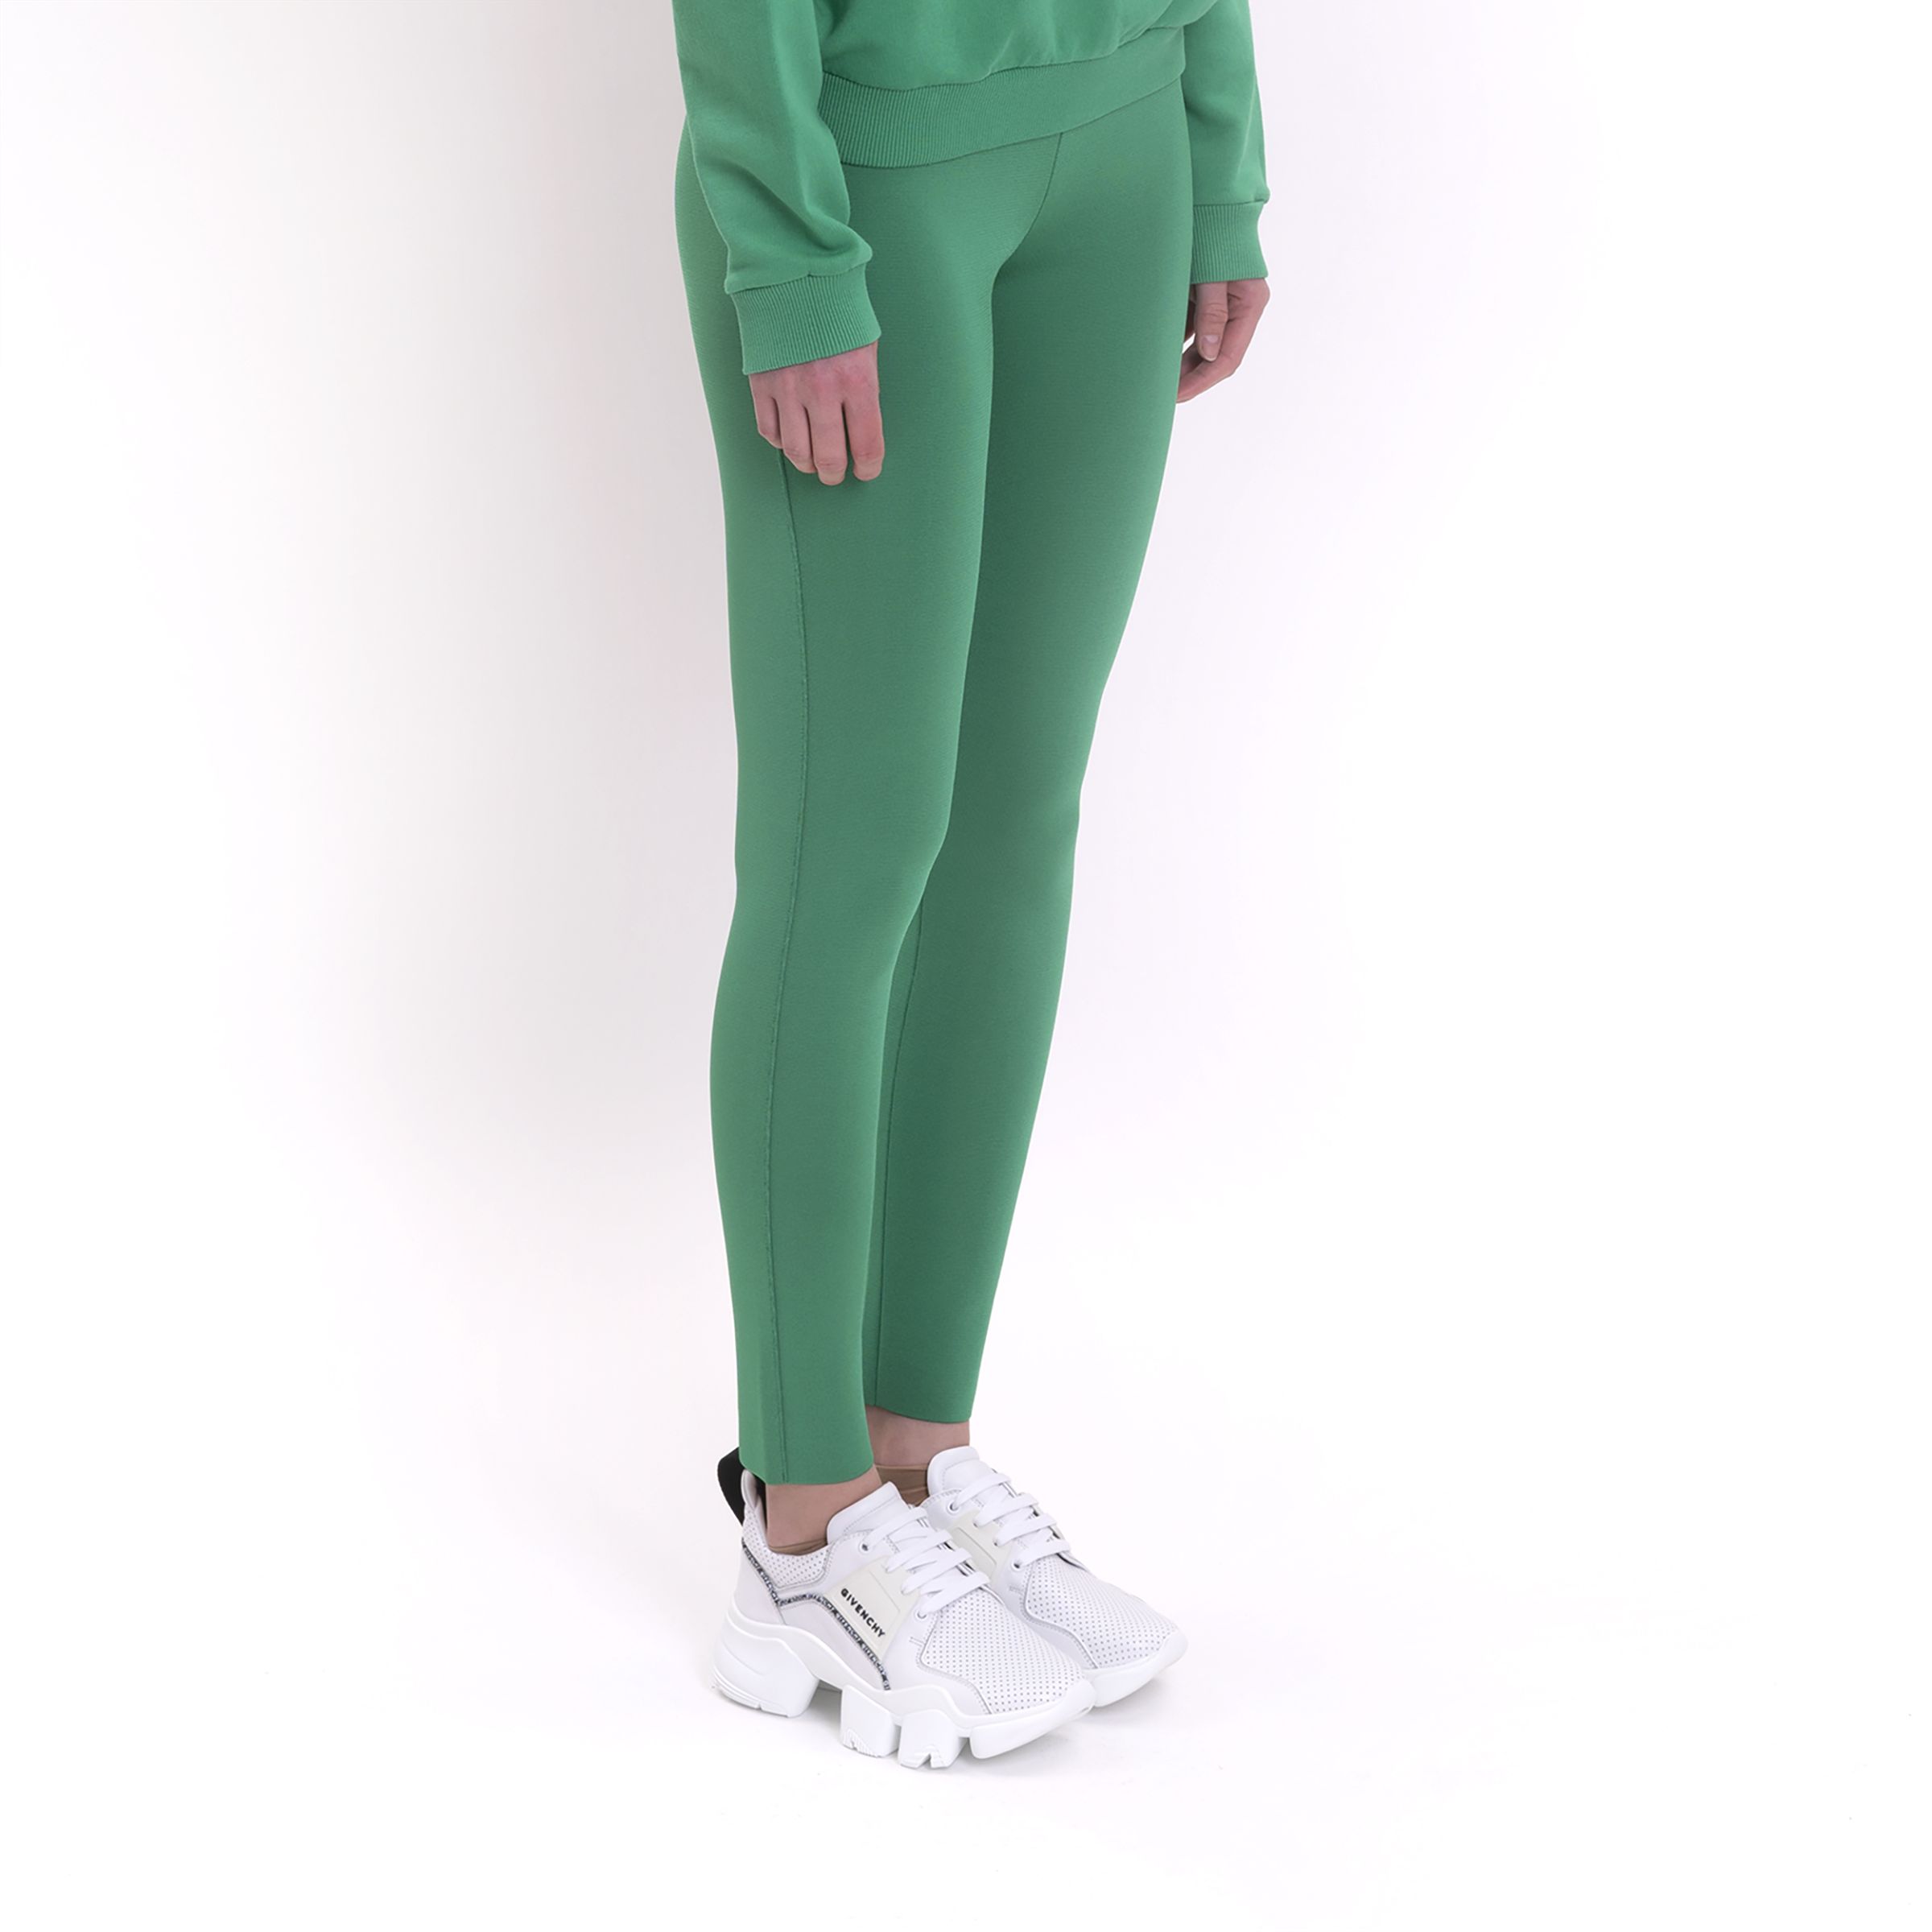 Легінси Givenchy зелені